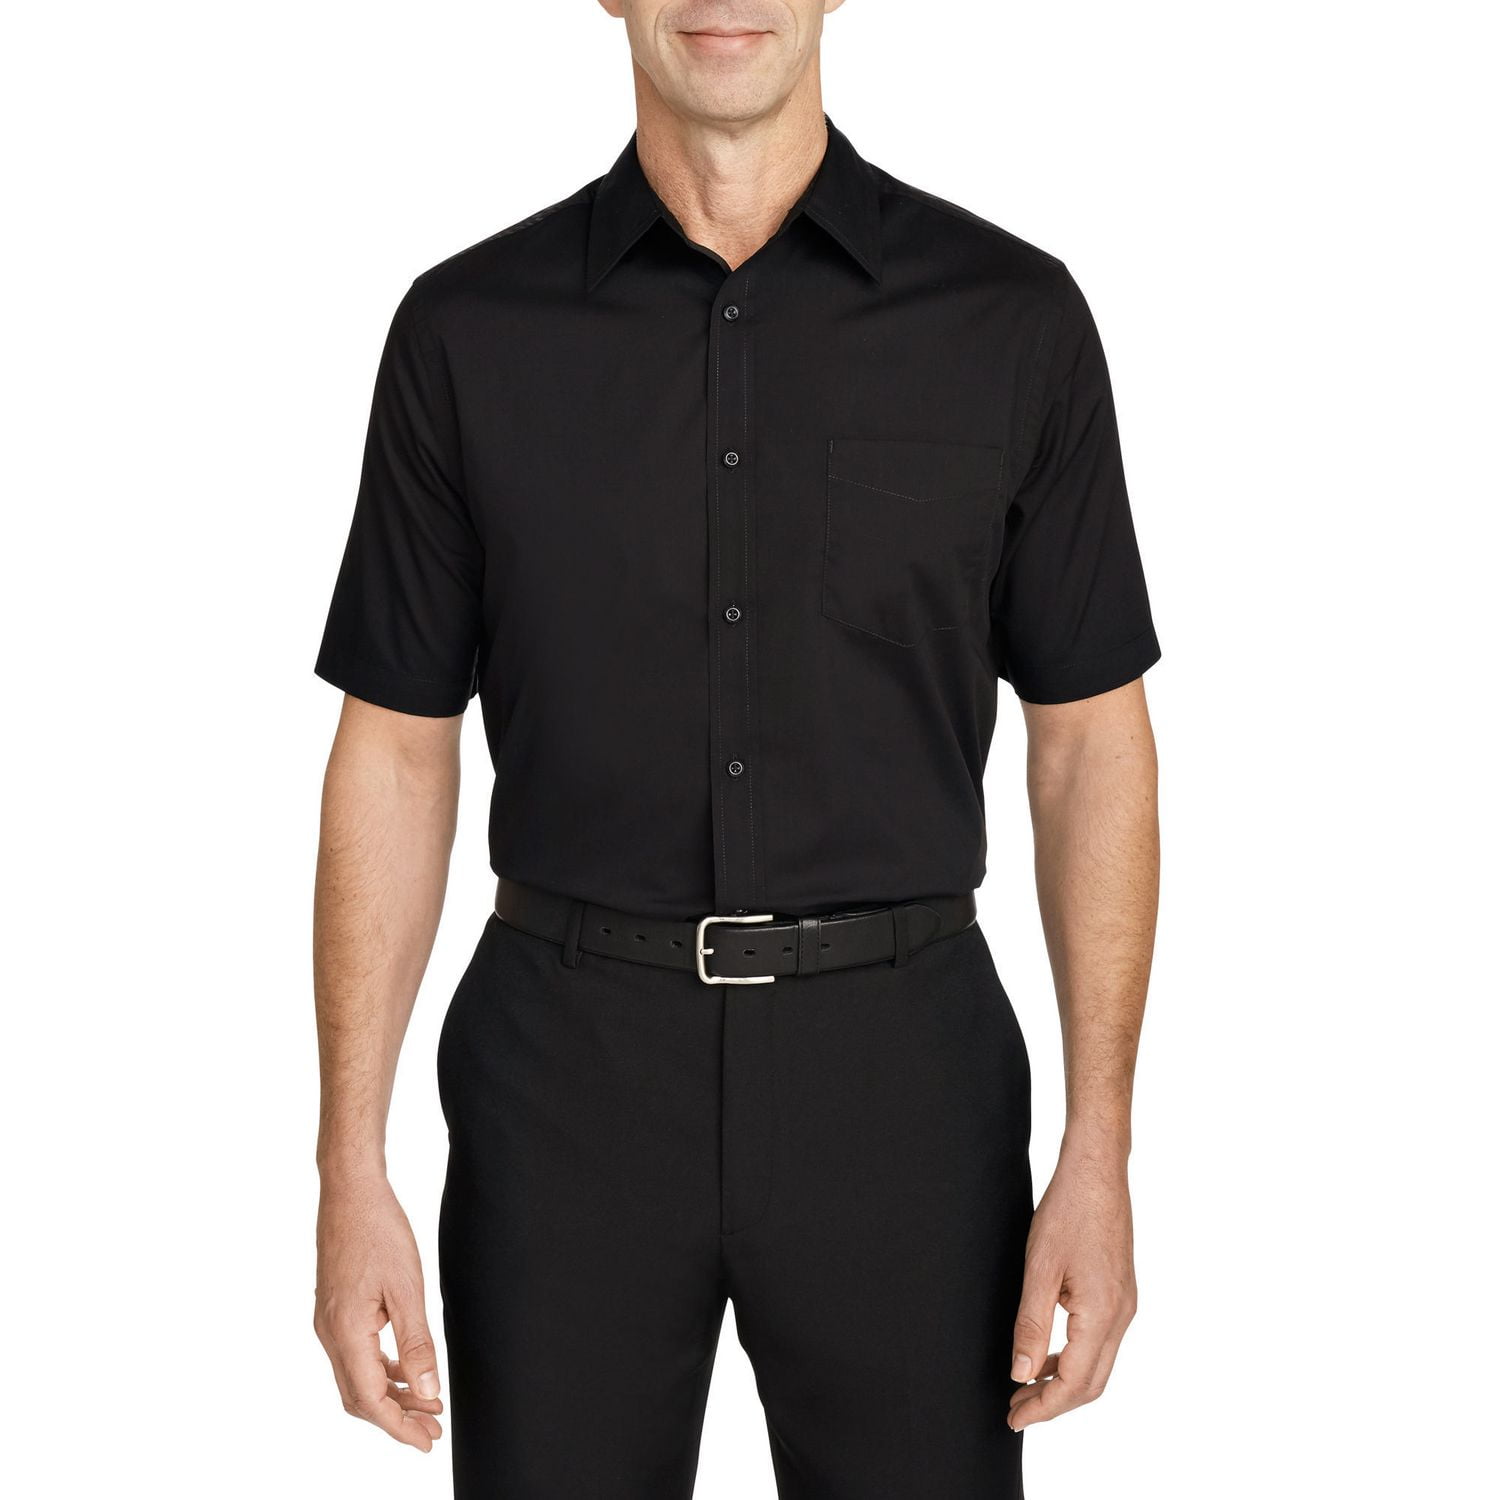 George Men's Short Sleeve Dress Shirt